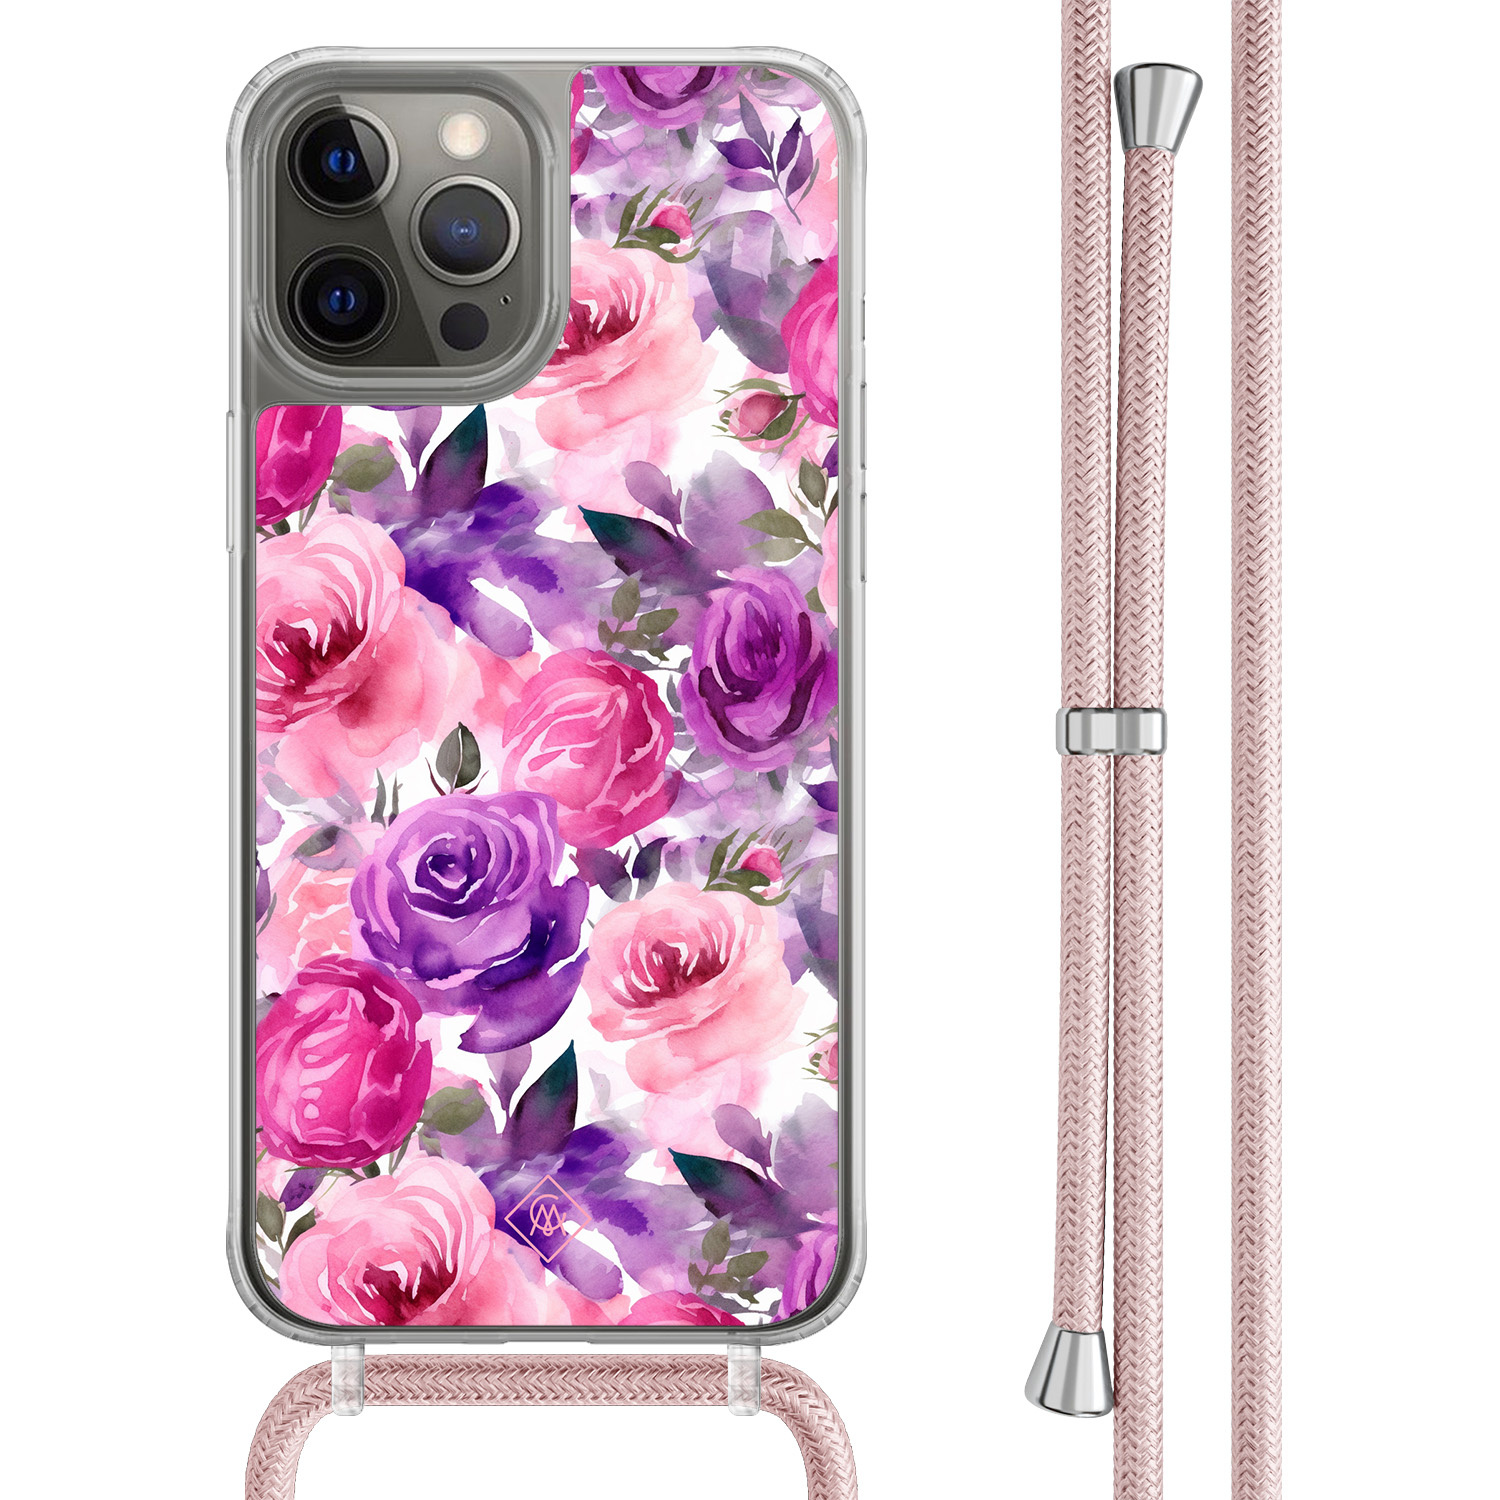 iPhone 12 (Pro) hoesje met rosegoud koord - Rosy blooms